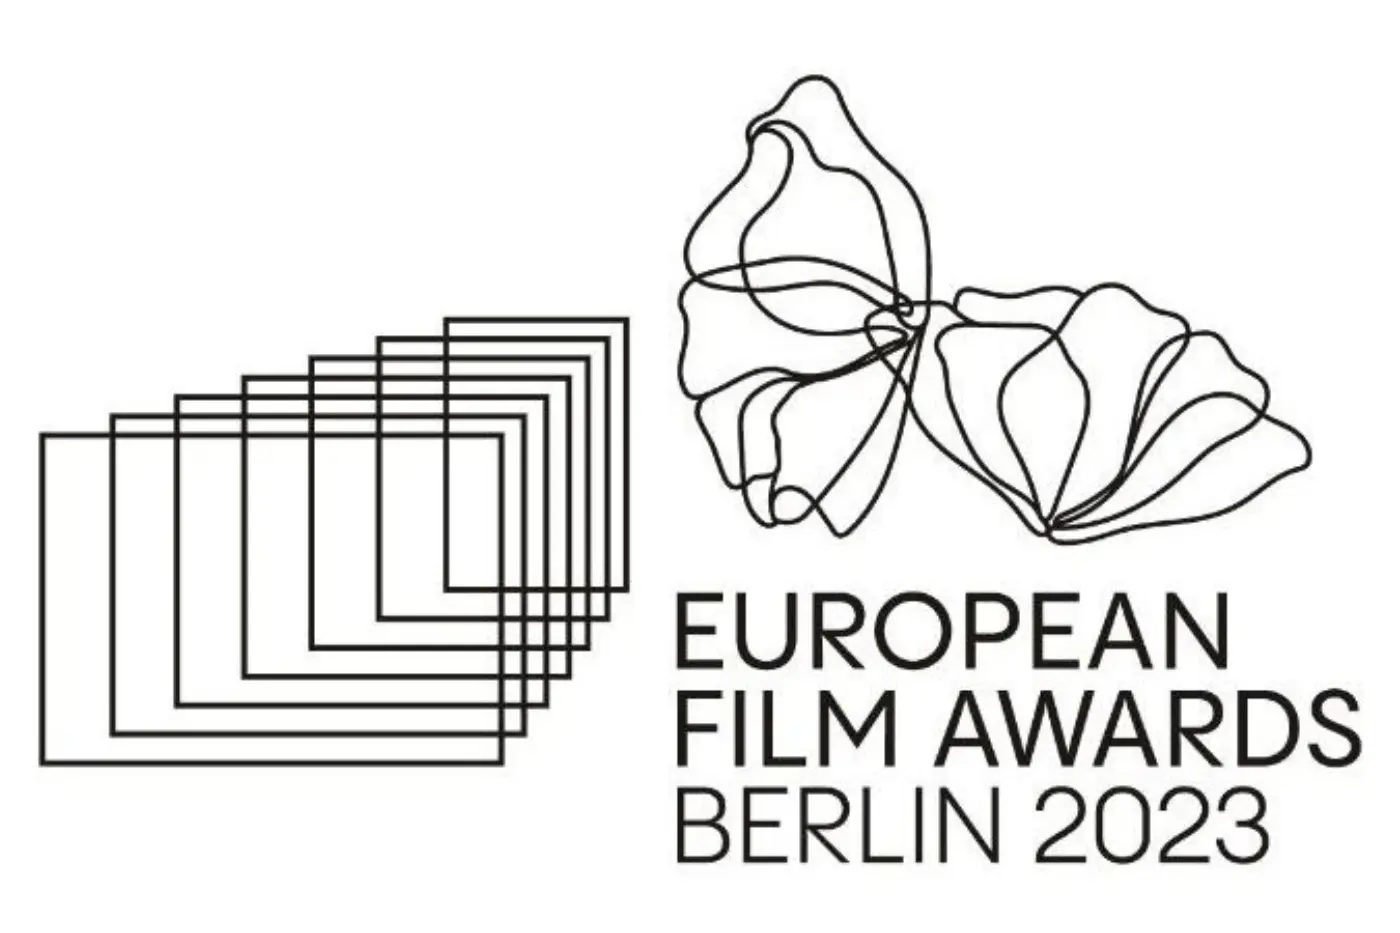 European Film Academy